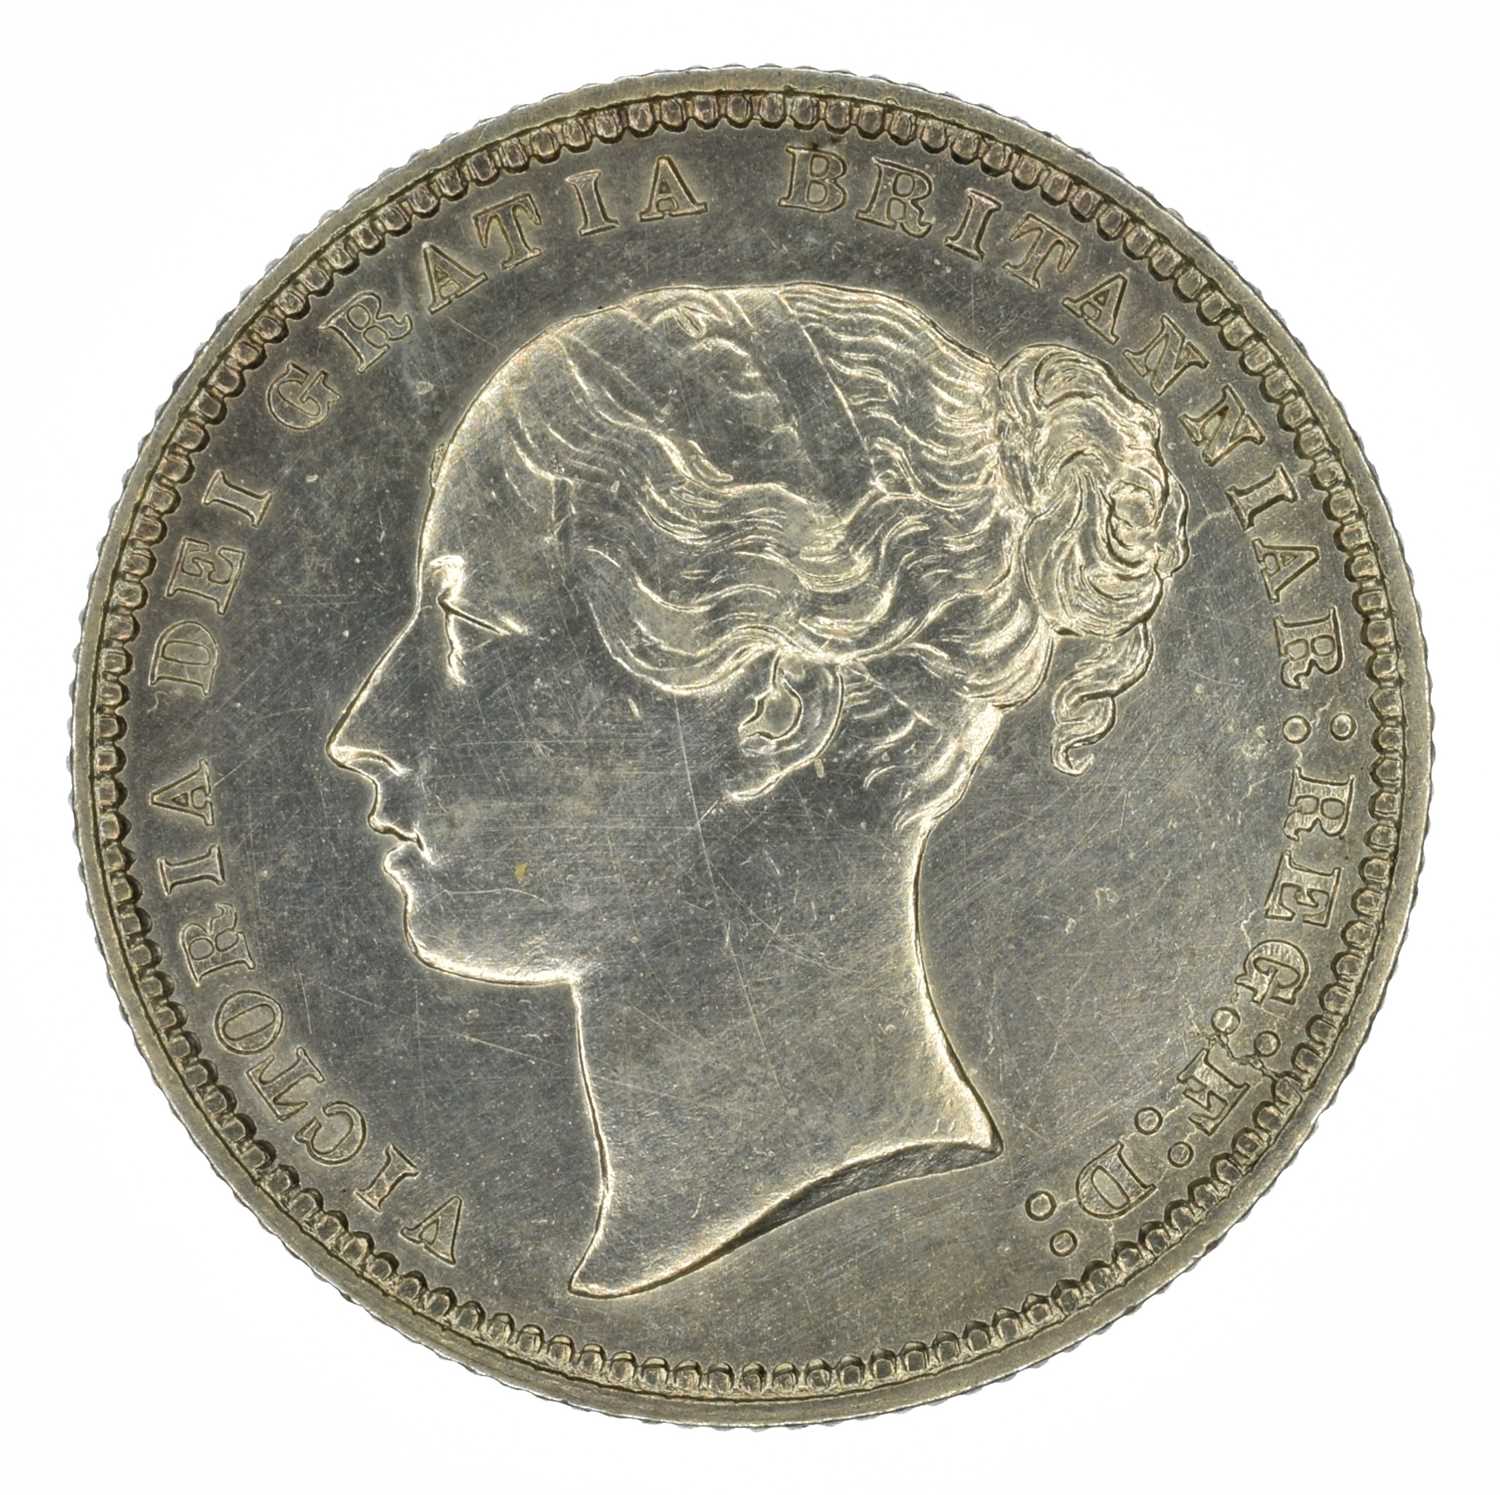 Lot 67 - Queen Victoria, Shilling, 1871, gEF.